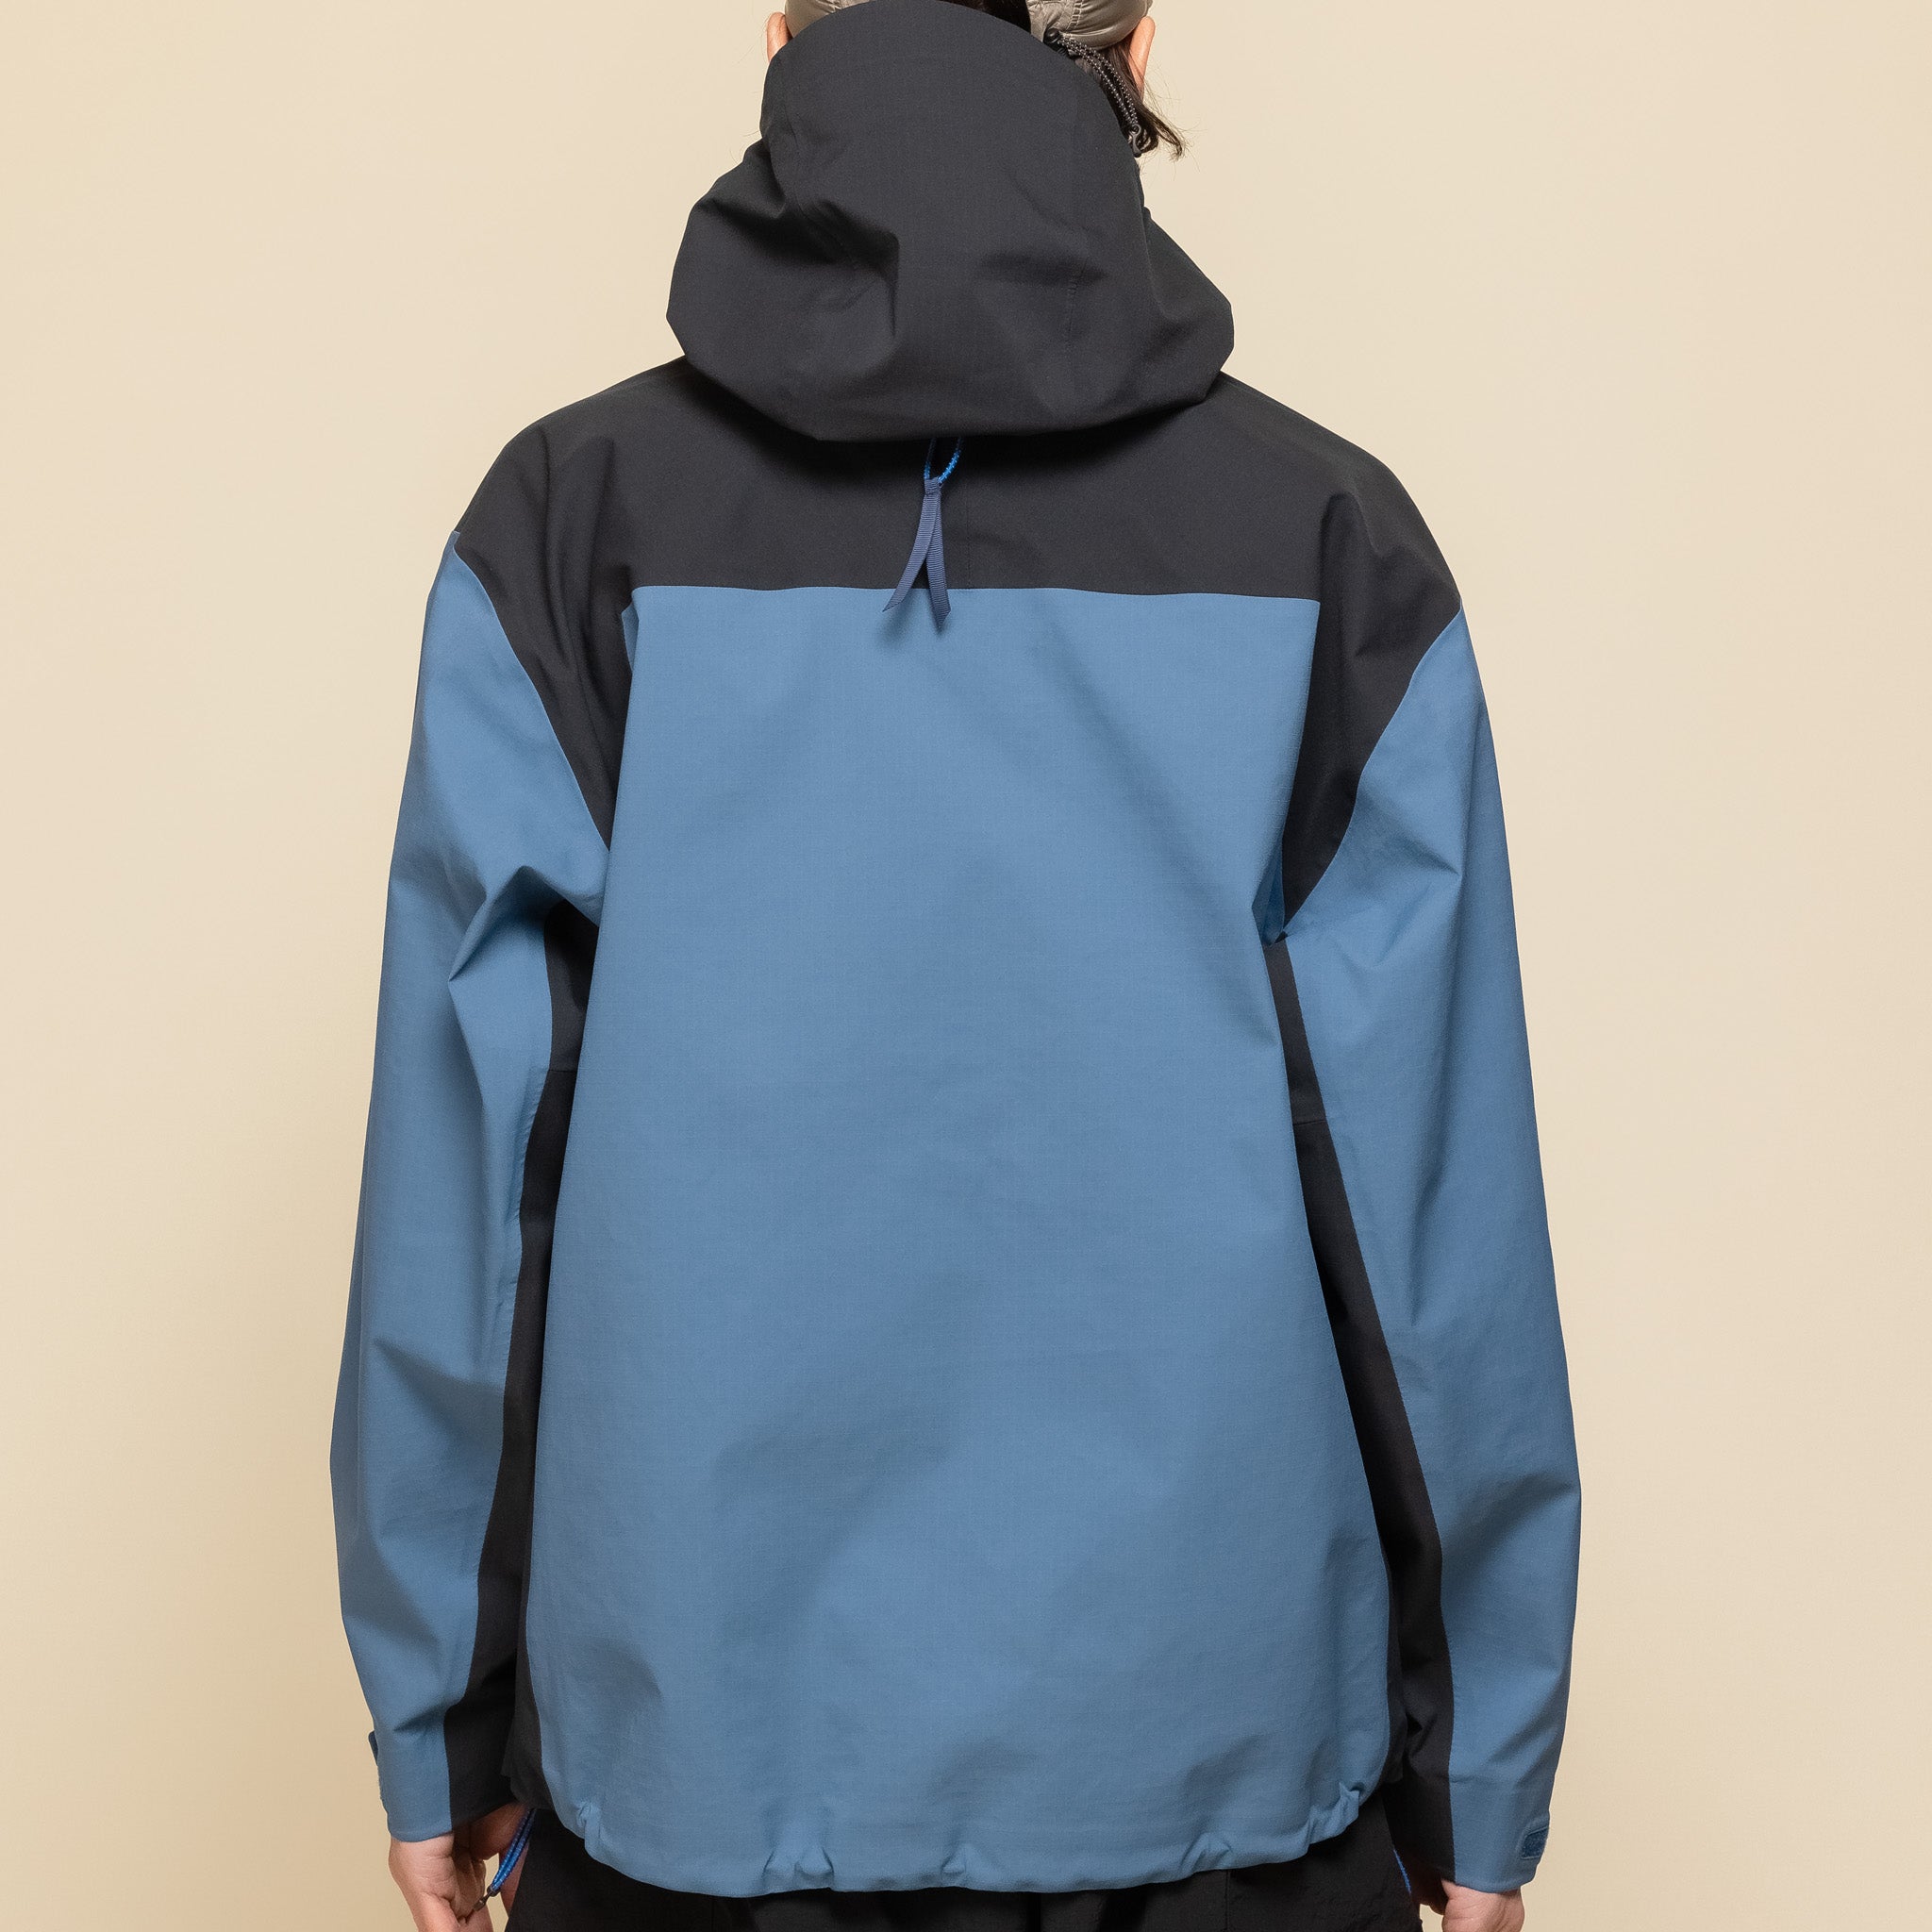 CMF Comfy Outdoor Garment - AR Shell Coexist Jacket - Blue